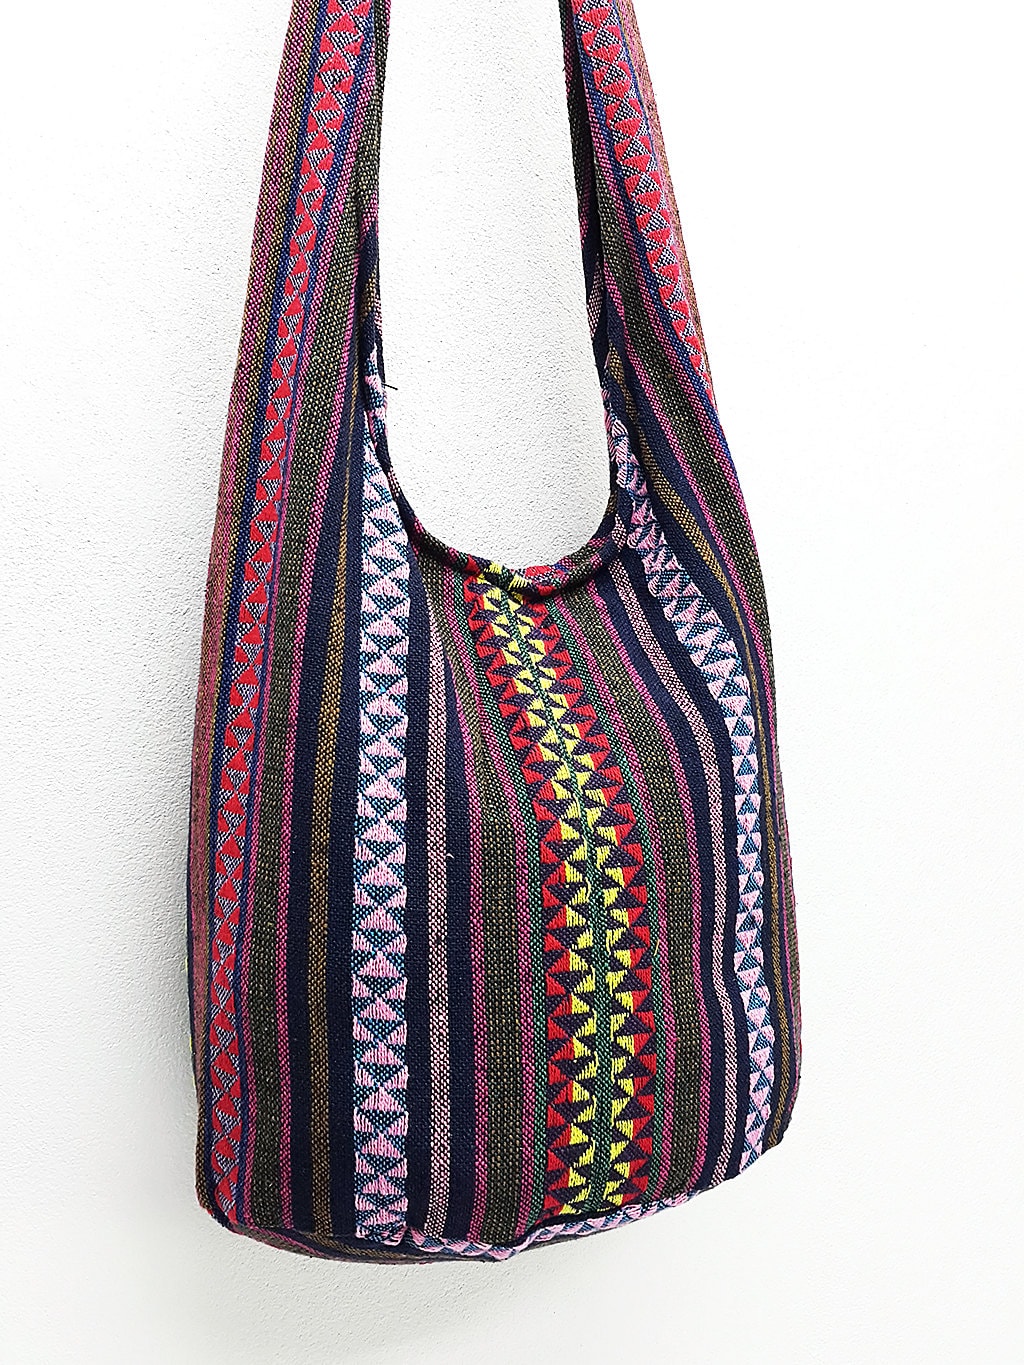 Woven Cotton Bag Hippie bag Hobo bag Boho bag Shoulder bag